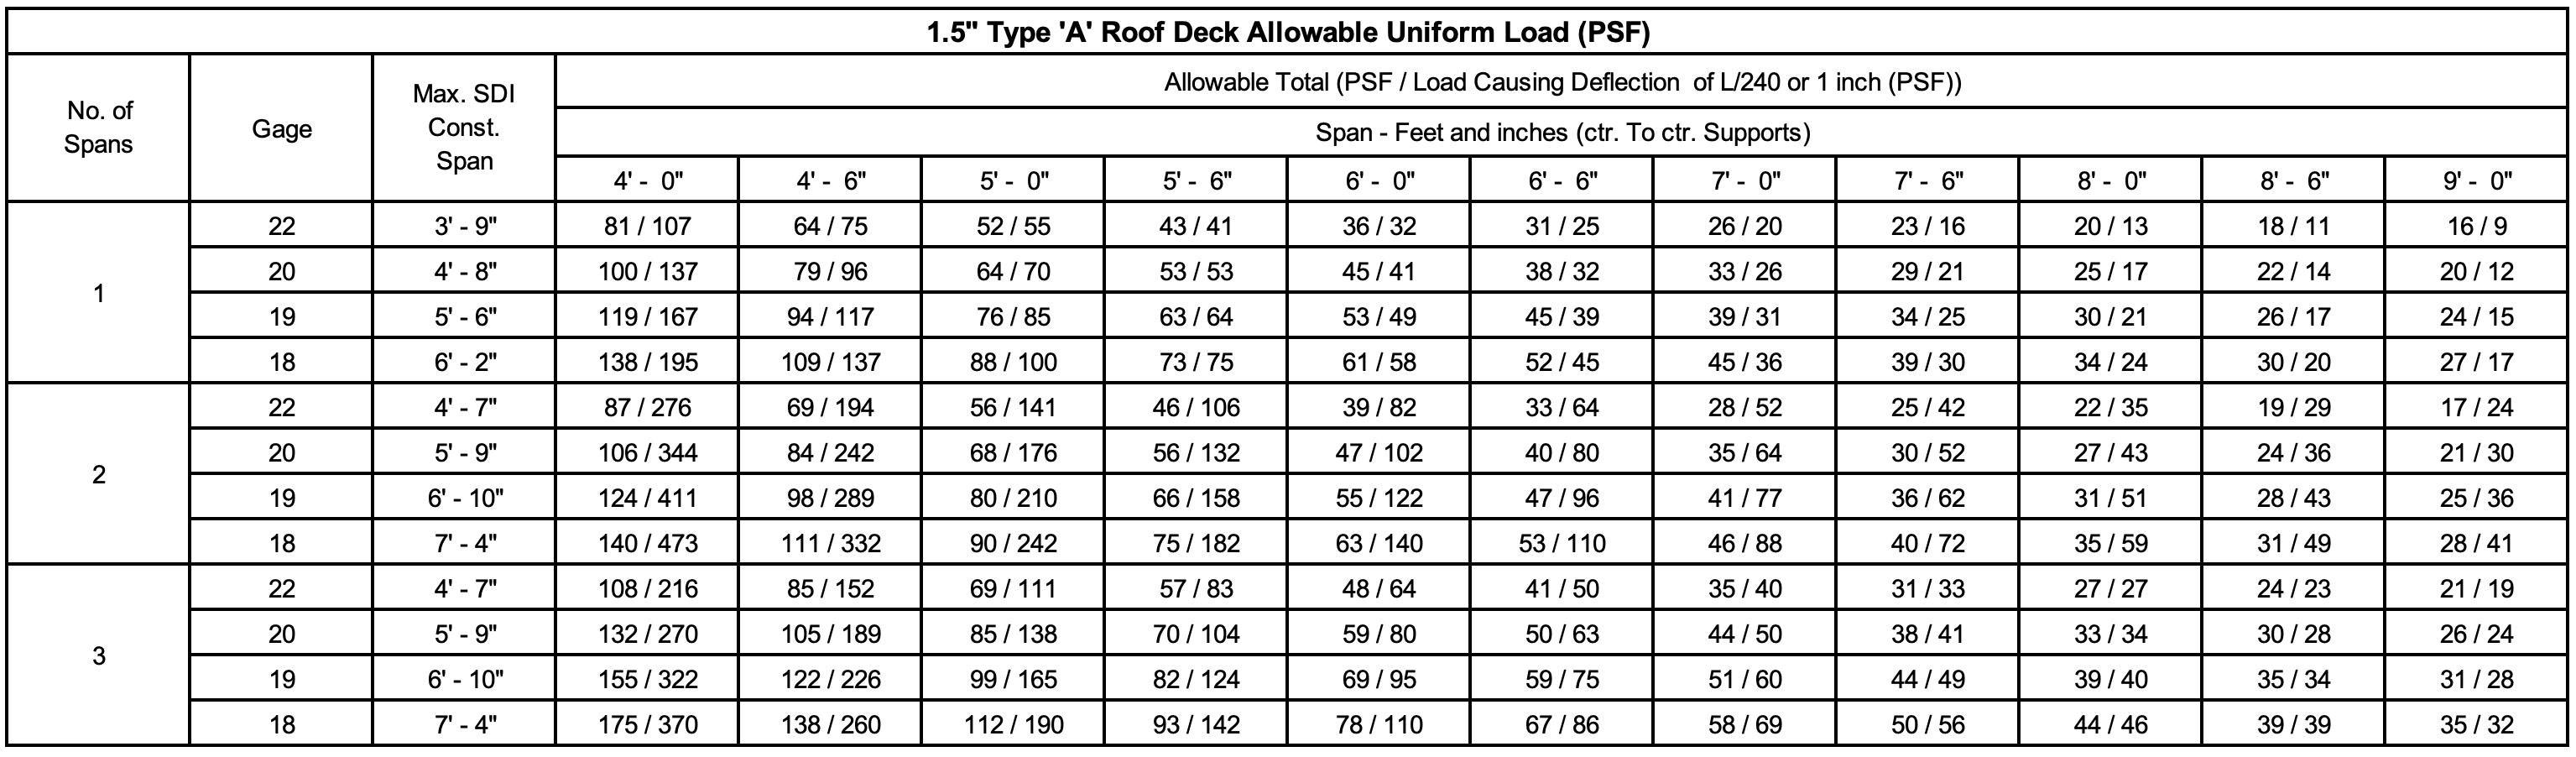 1.5 A Roof Deck Uniform Load Table